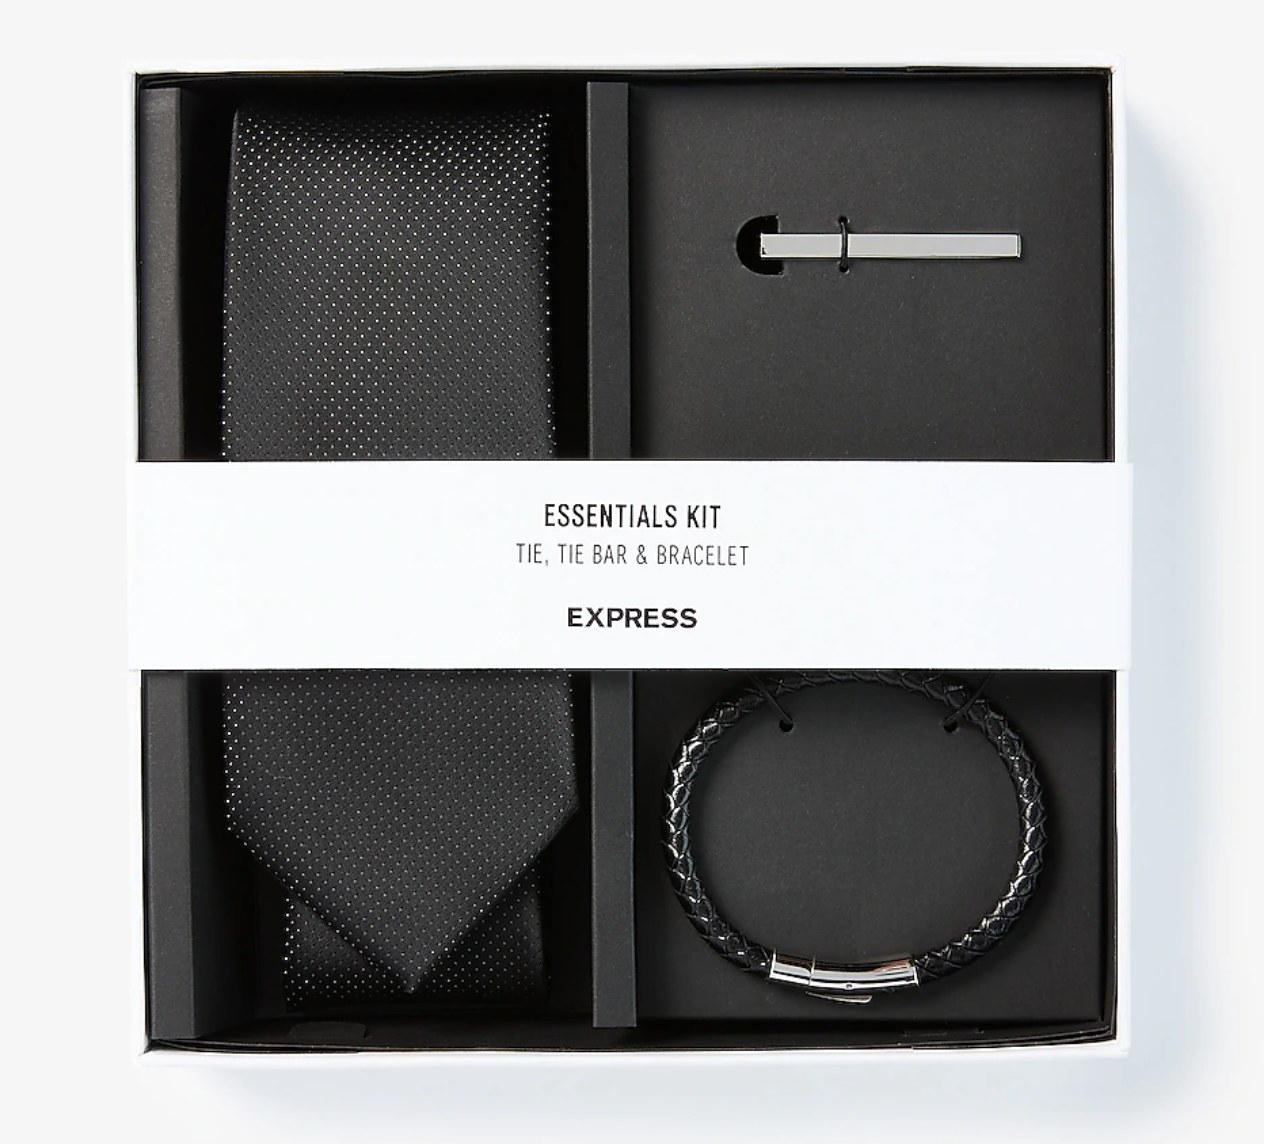 A box with a black tie, silver tie clip and black bracelet inside 